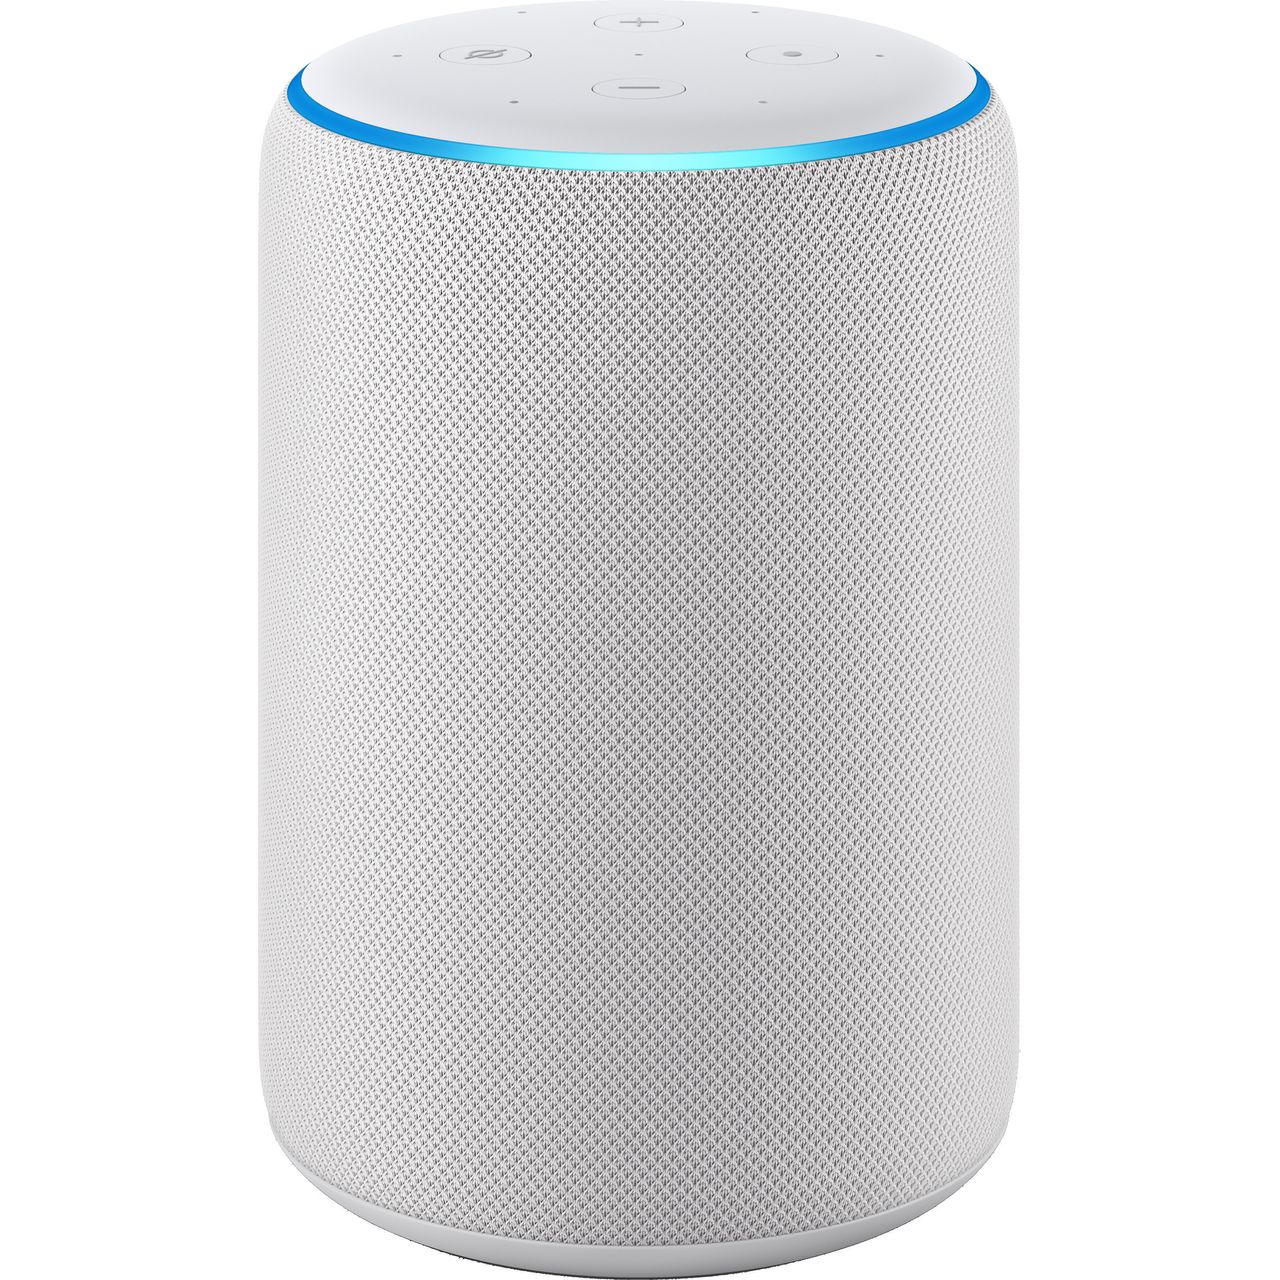 Amazon Echo Plus (2nd Gen) Smart Speaker with Alexa Review